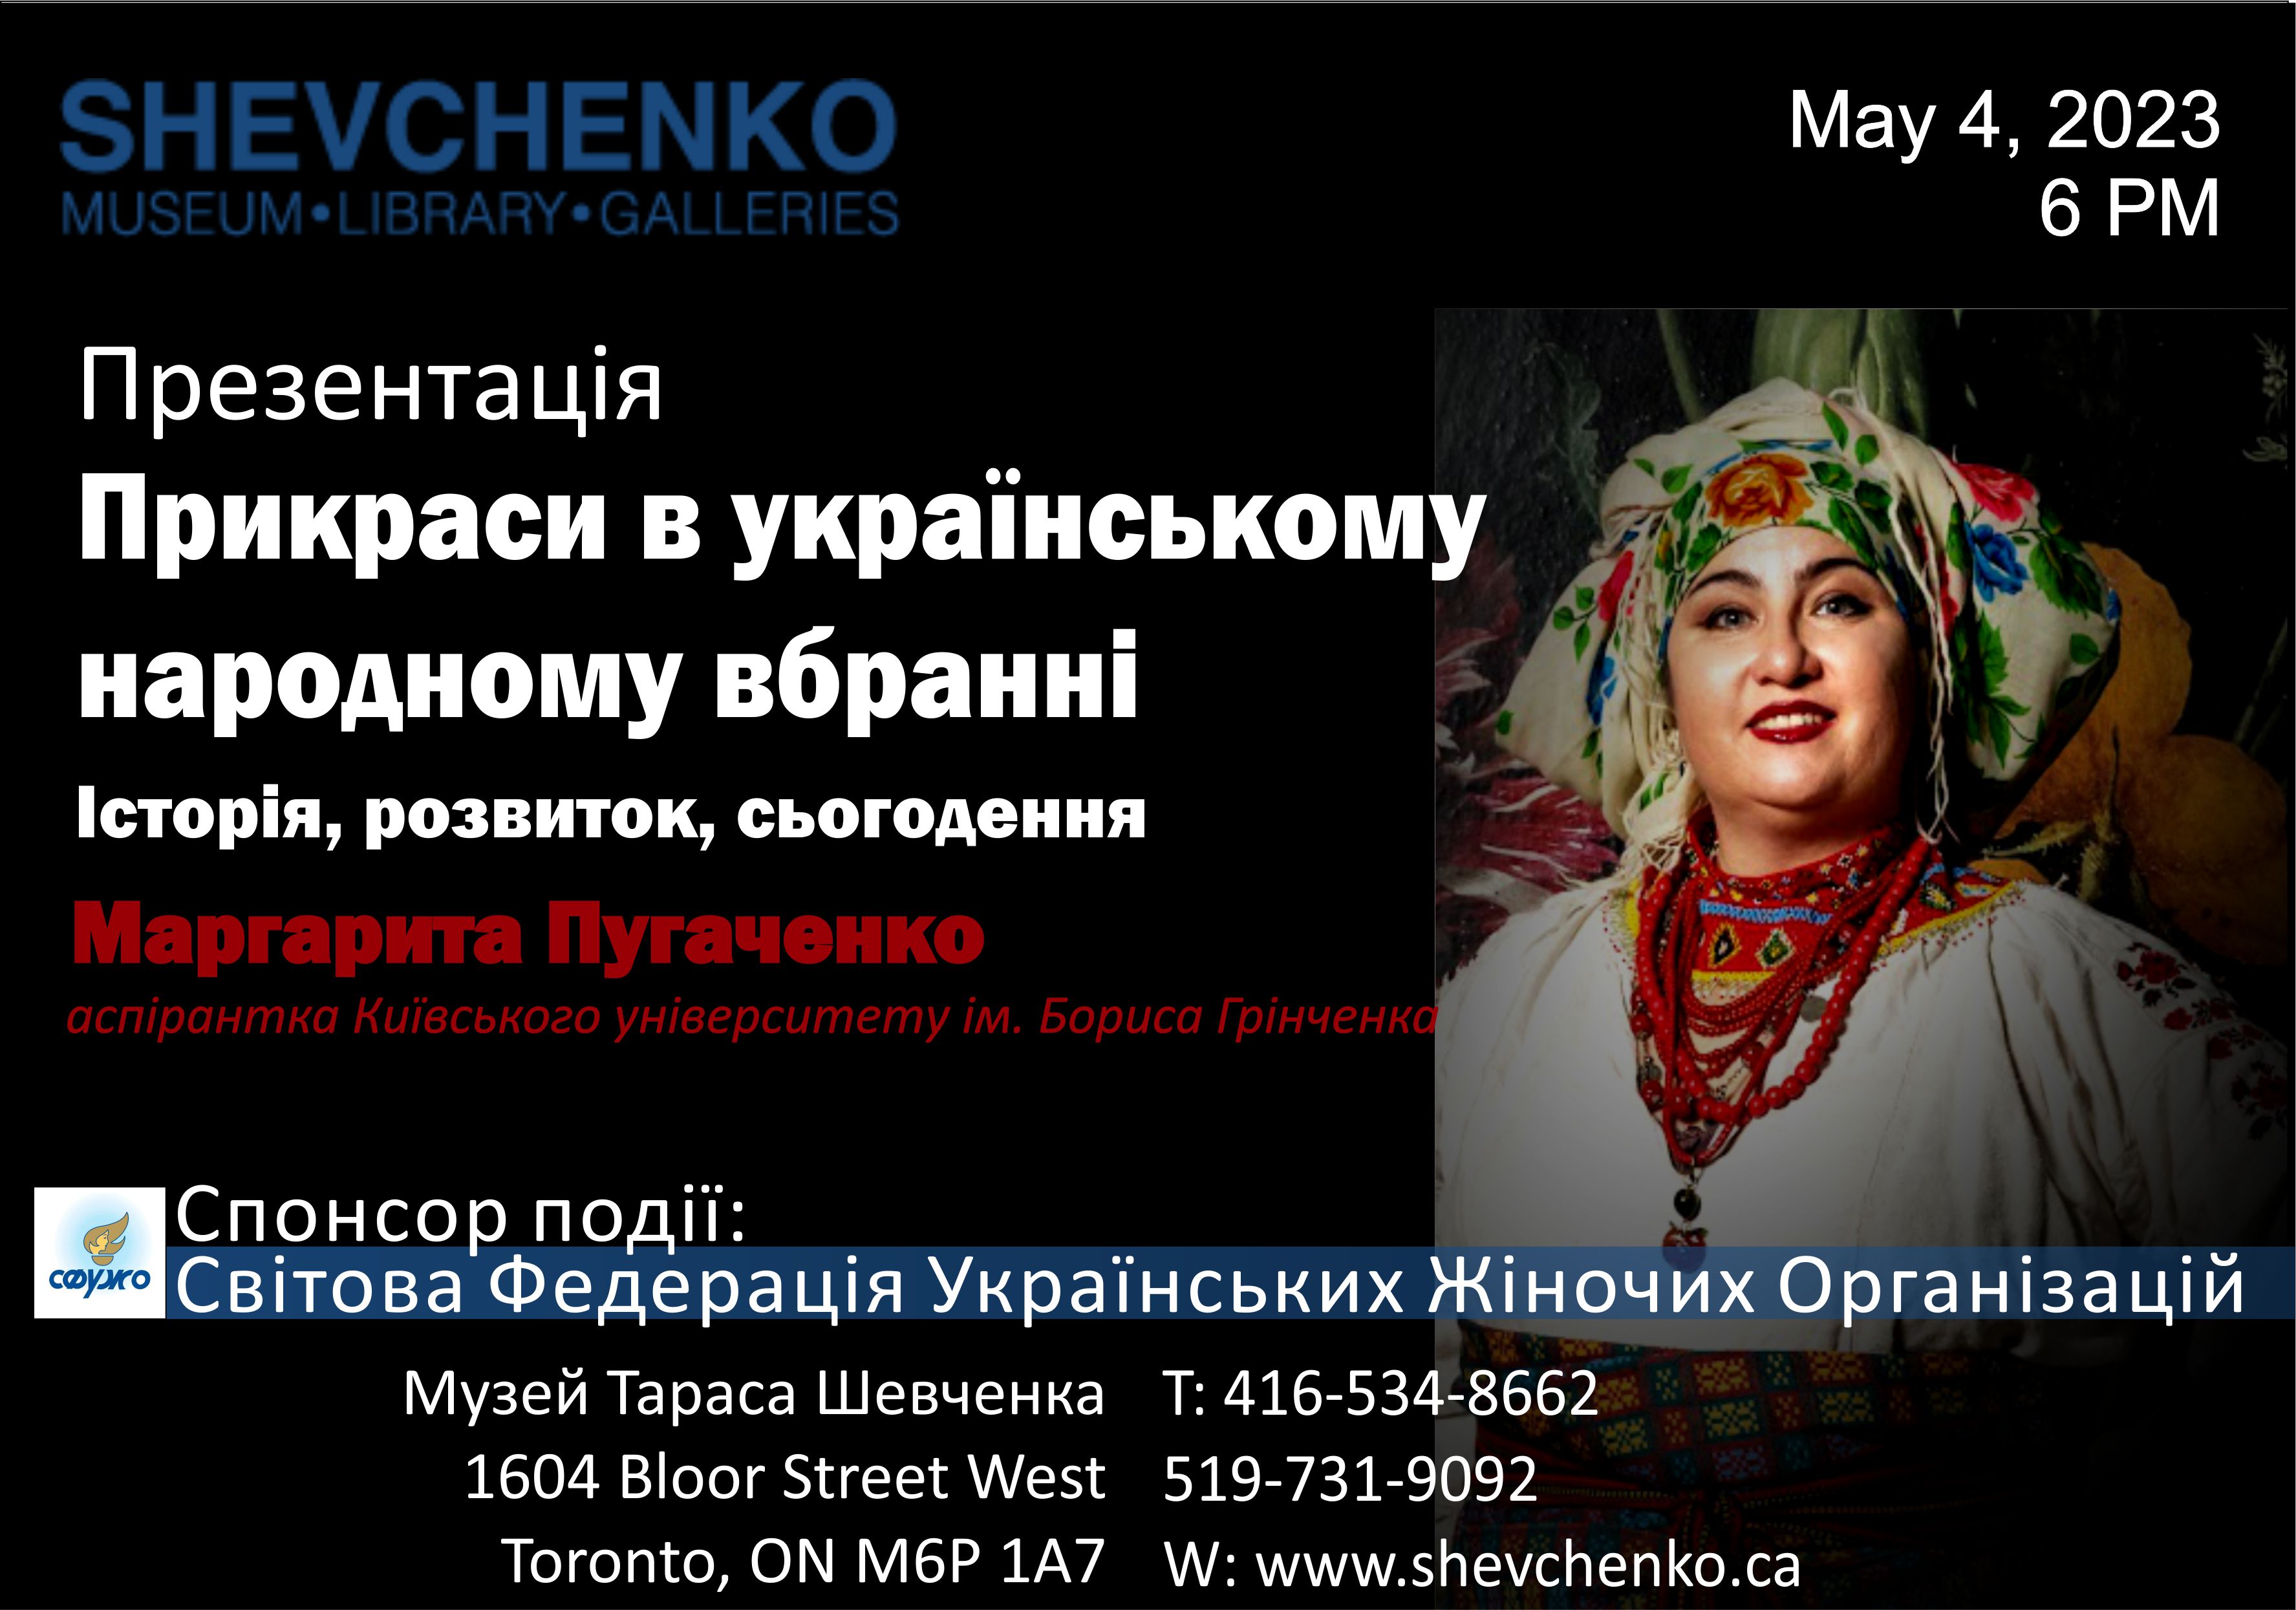 Jewellery in Ukrainian Folk Clothing: History, development, present